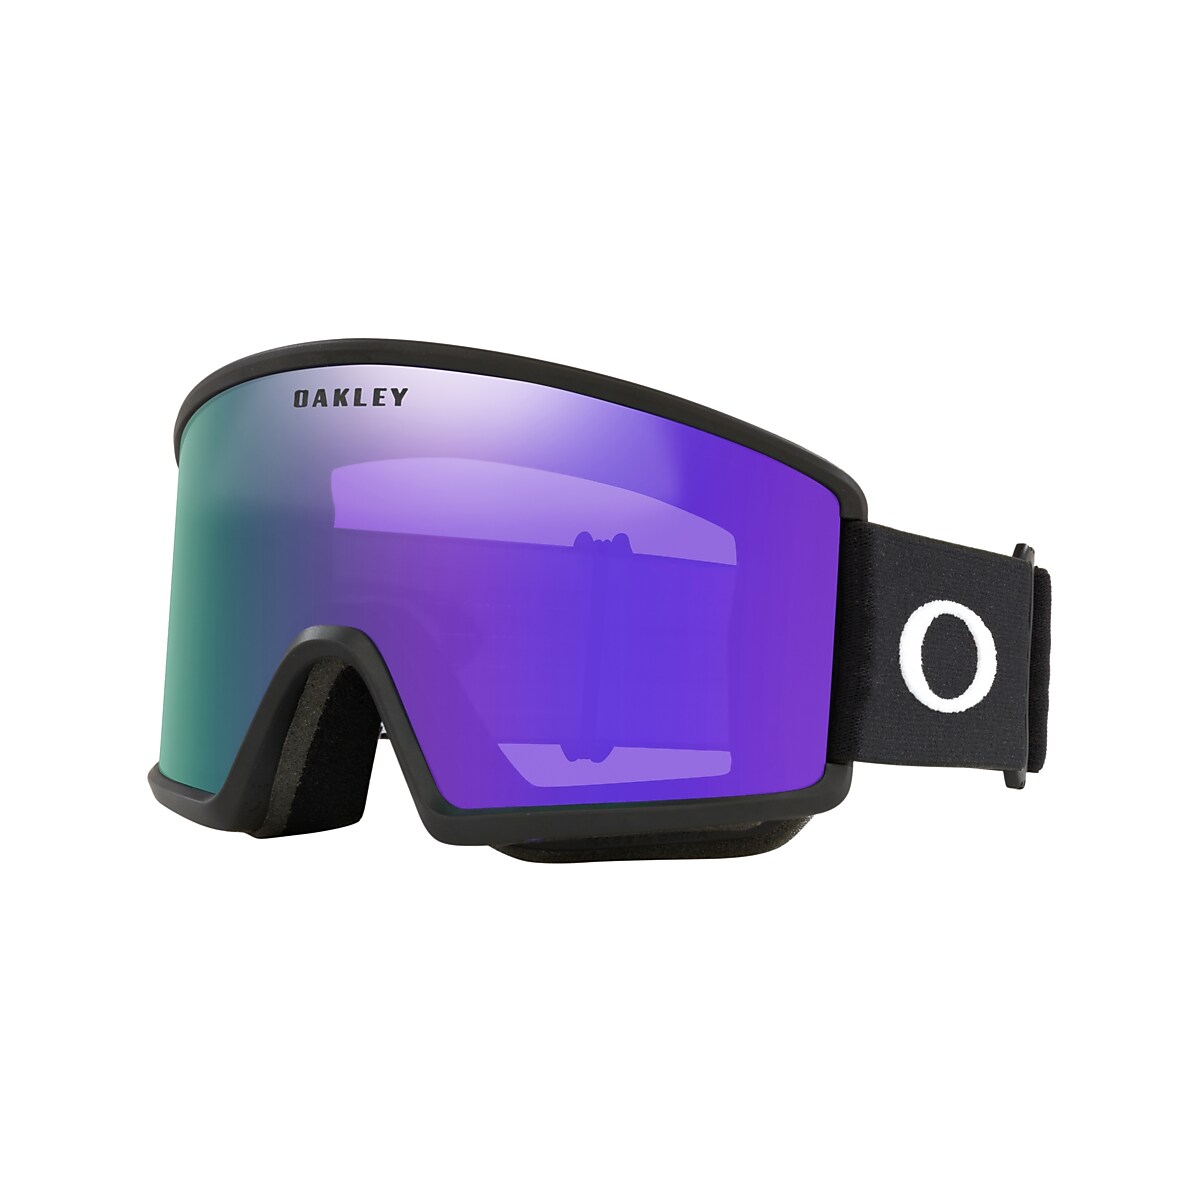 Aprender acerca 84+ imagen oakley goggles purple